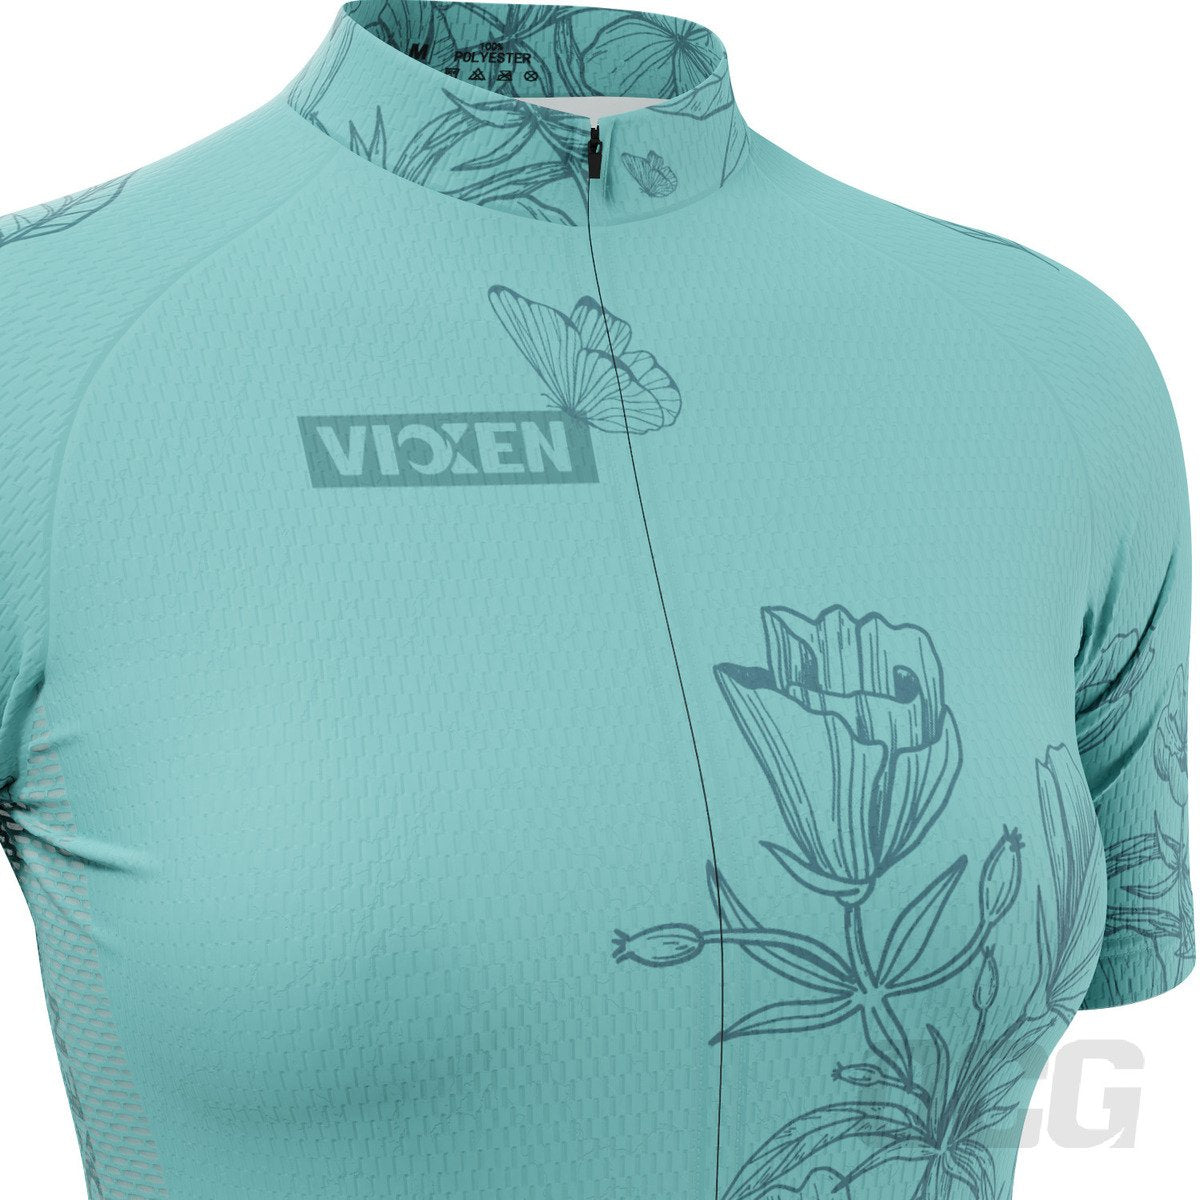 Women's Flower Power Short Sleeve Cycling Jersey